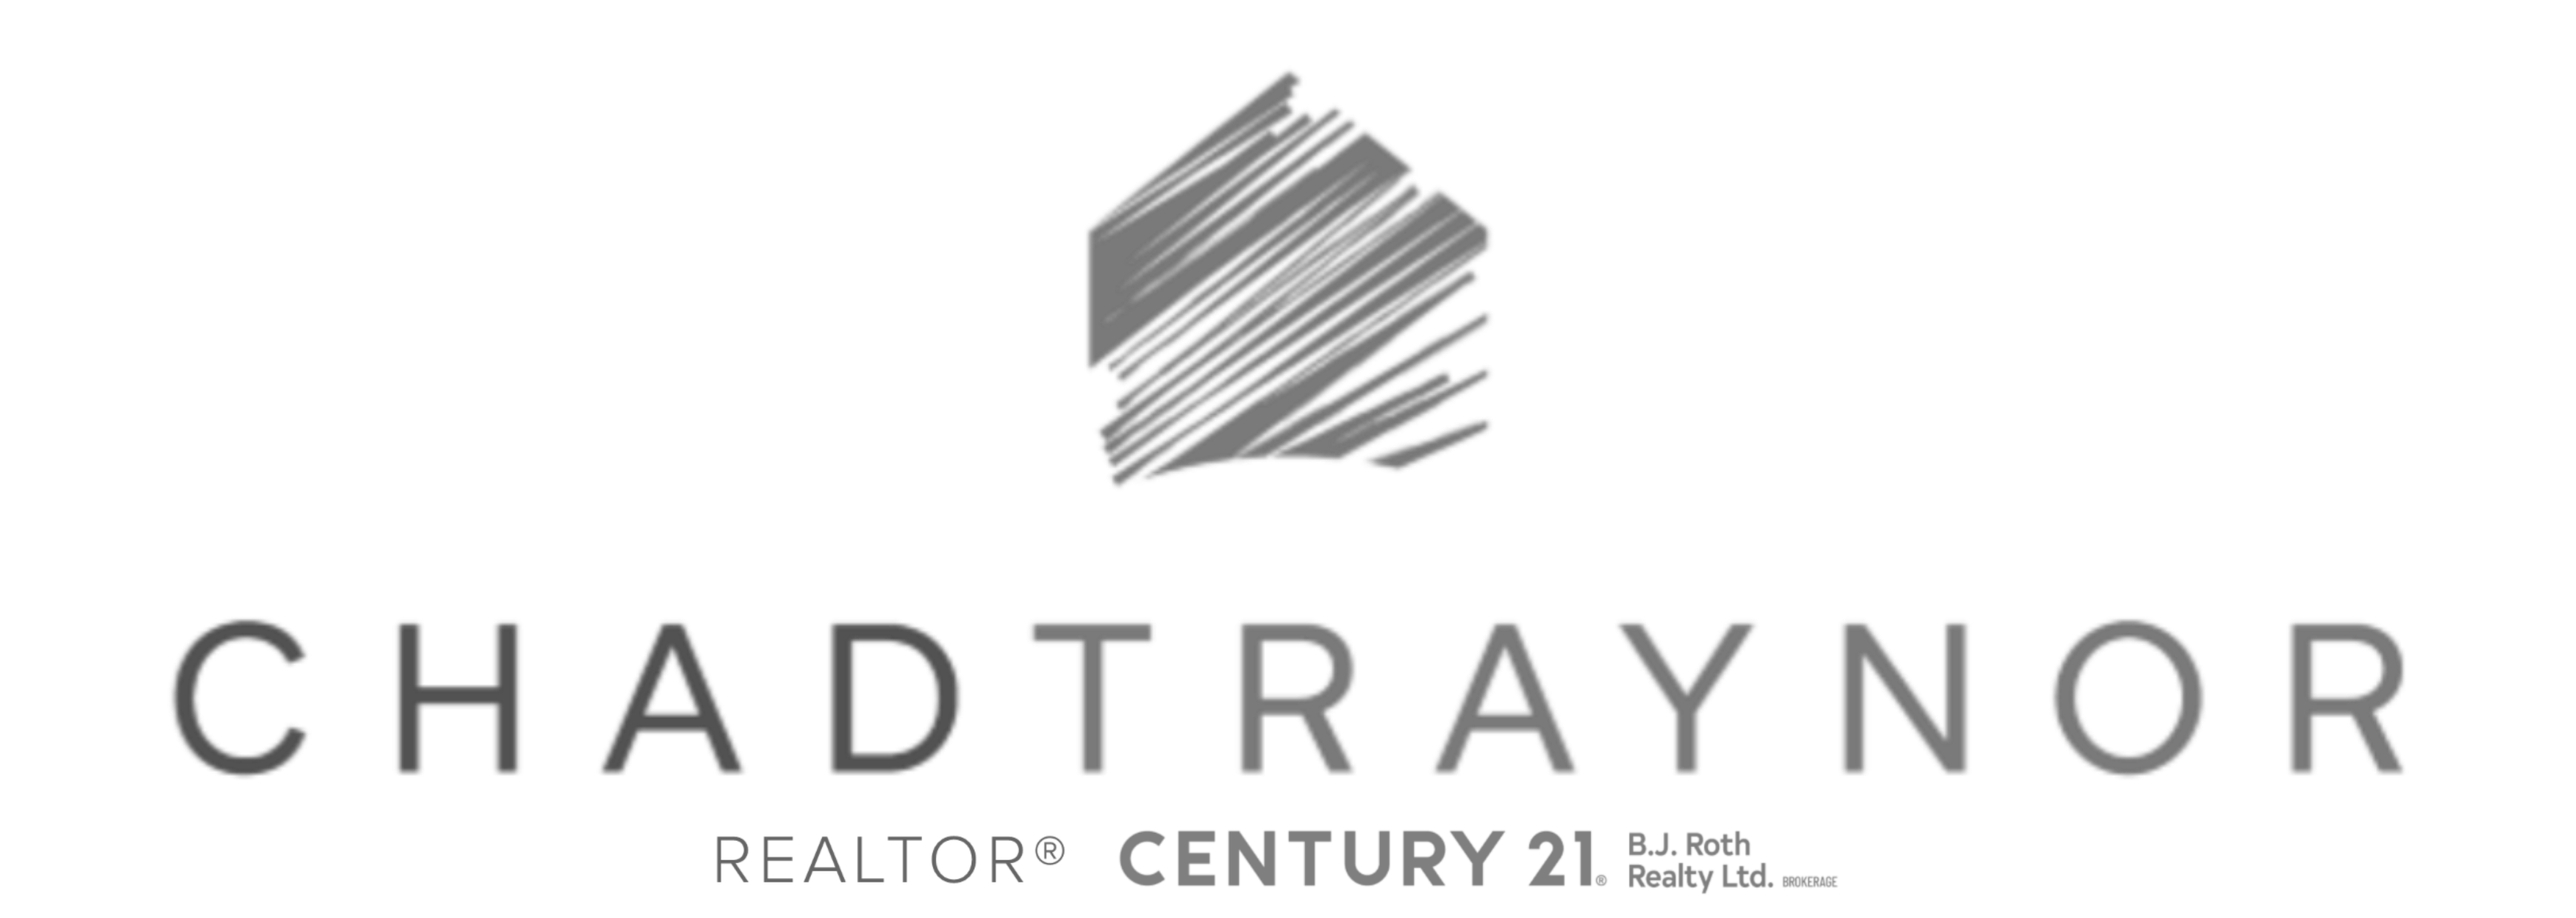 Century 21 - Chad Traynor